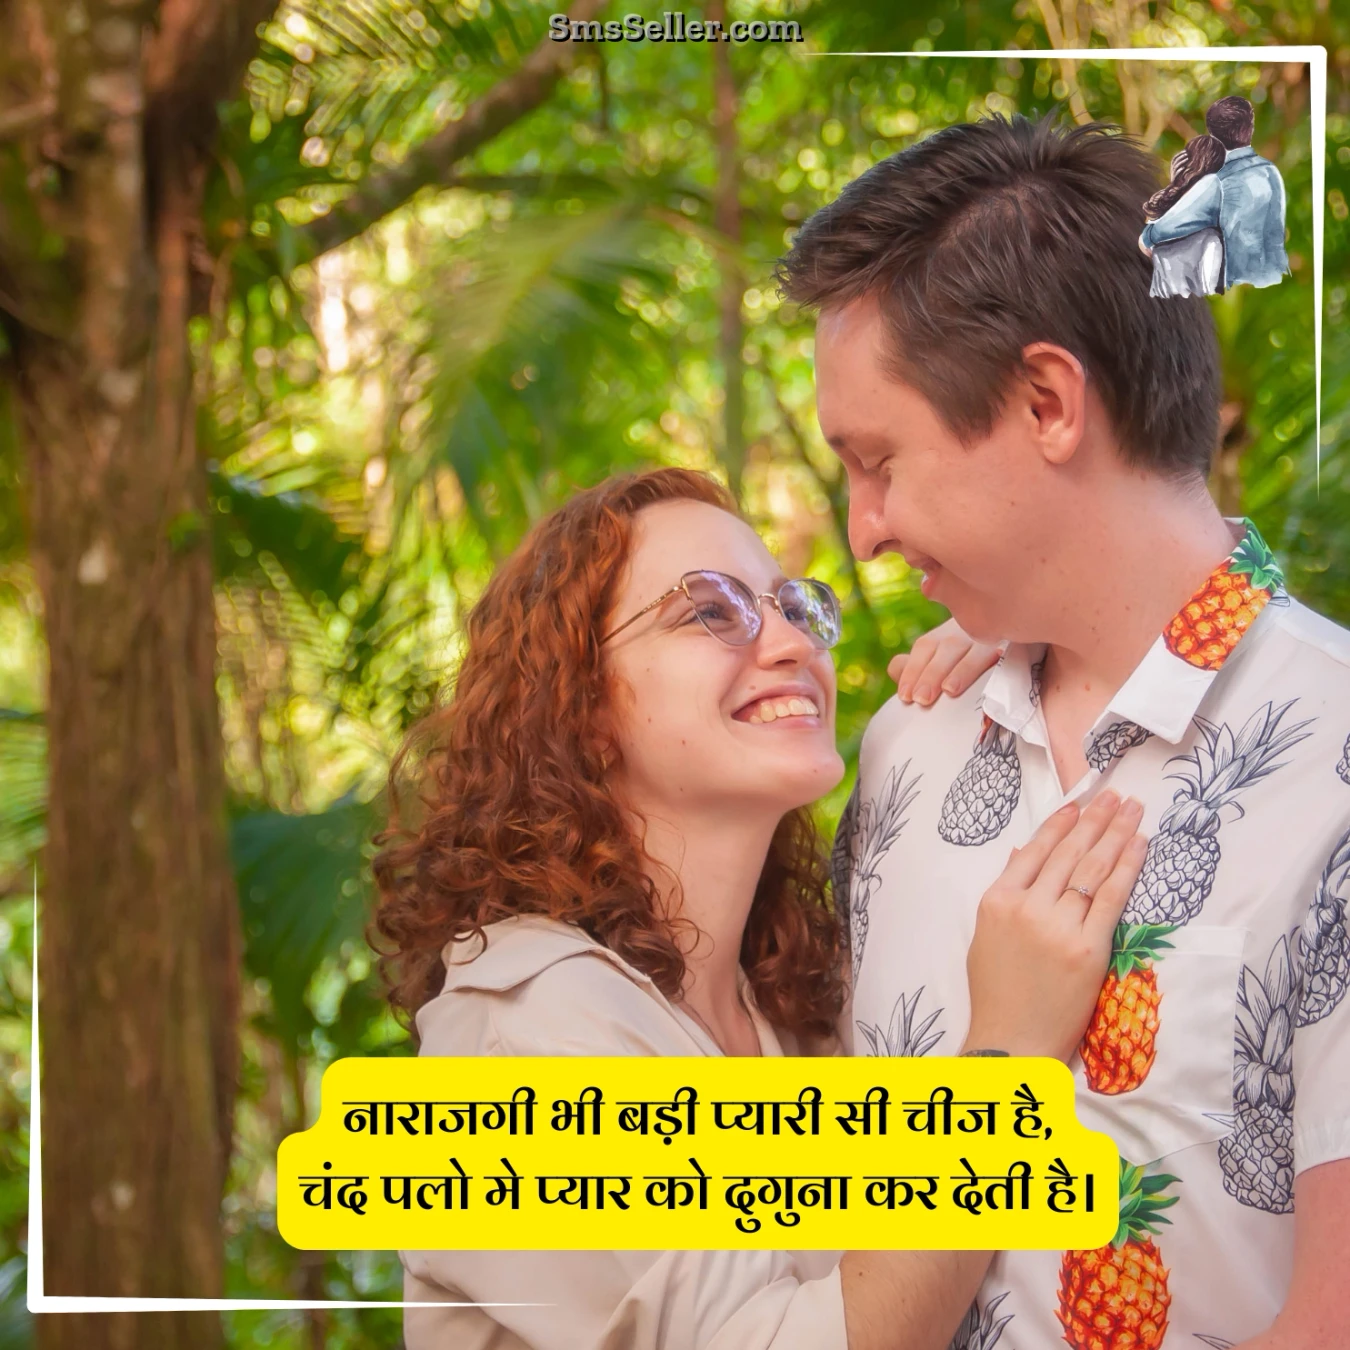 cute love quotes in hindi naraazgi bhi pyari